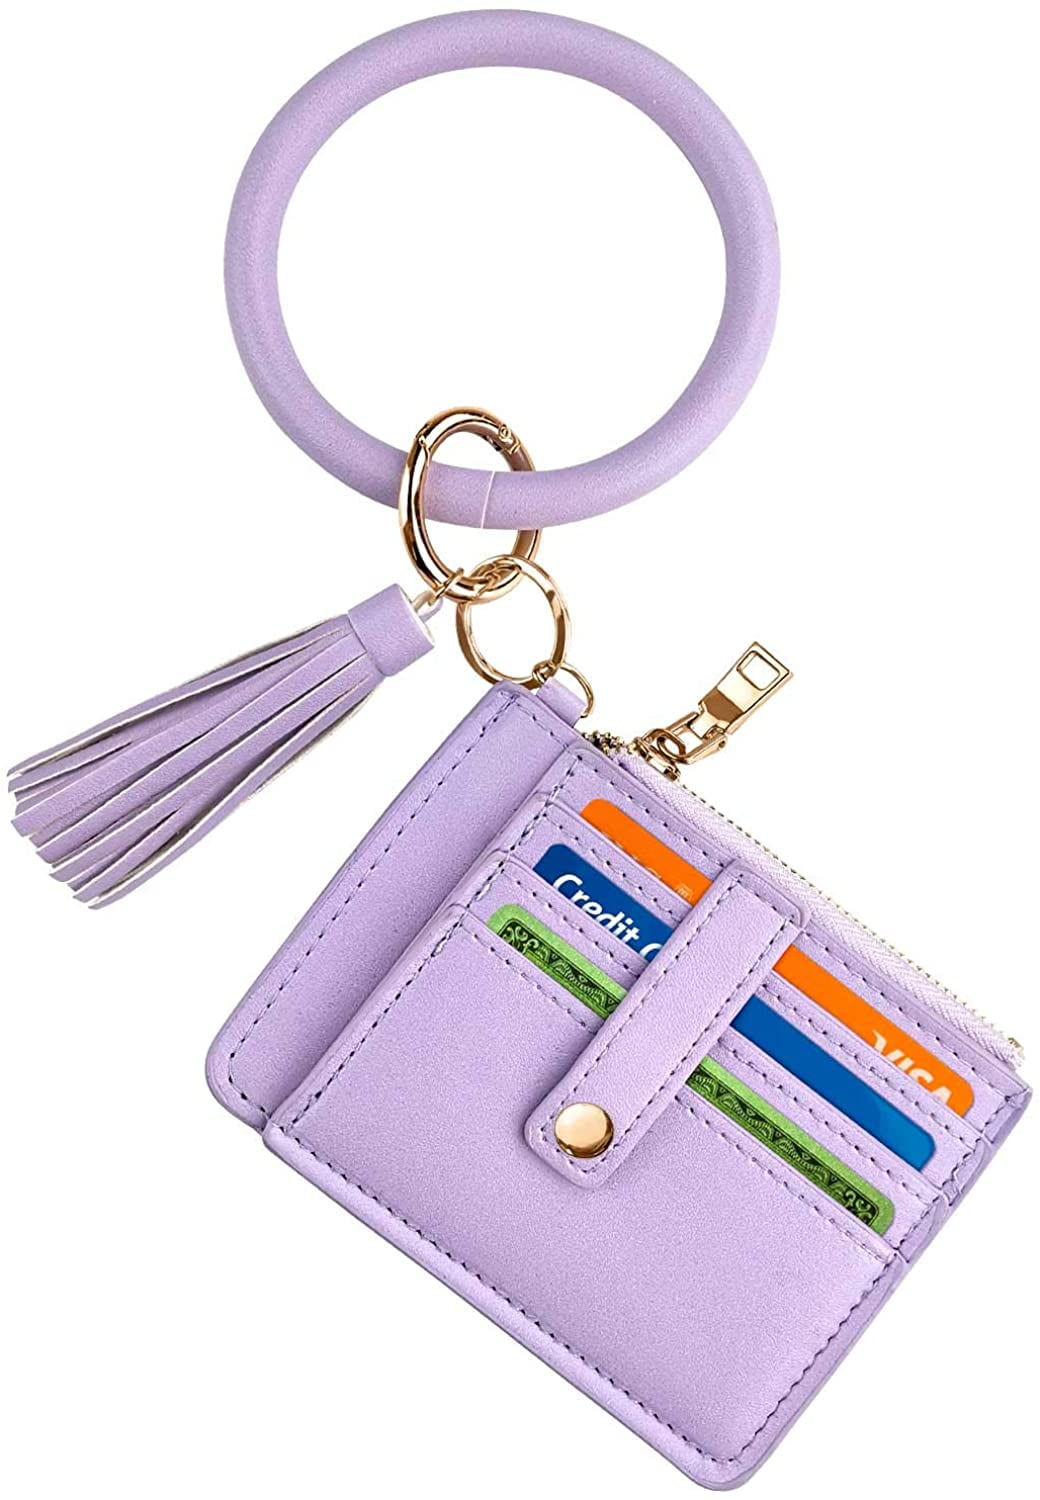 Circle Bangle Leather Keychain Wallet ID Card Holder Keyring Wristlet Bracelet Key Ring Chain Tassel Purse Women Girls 